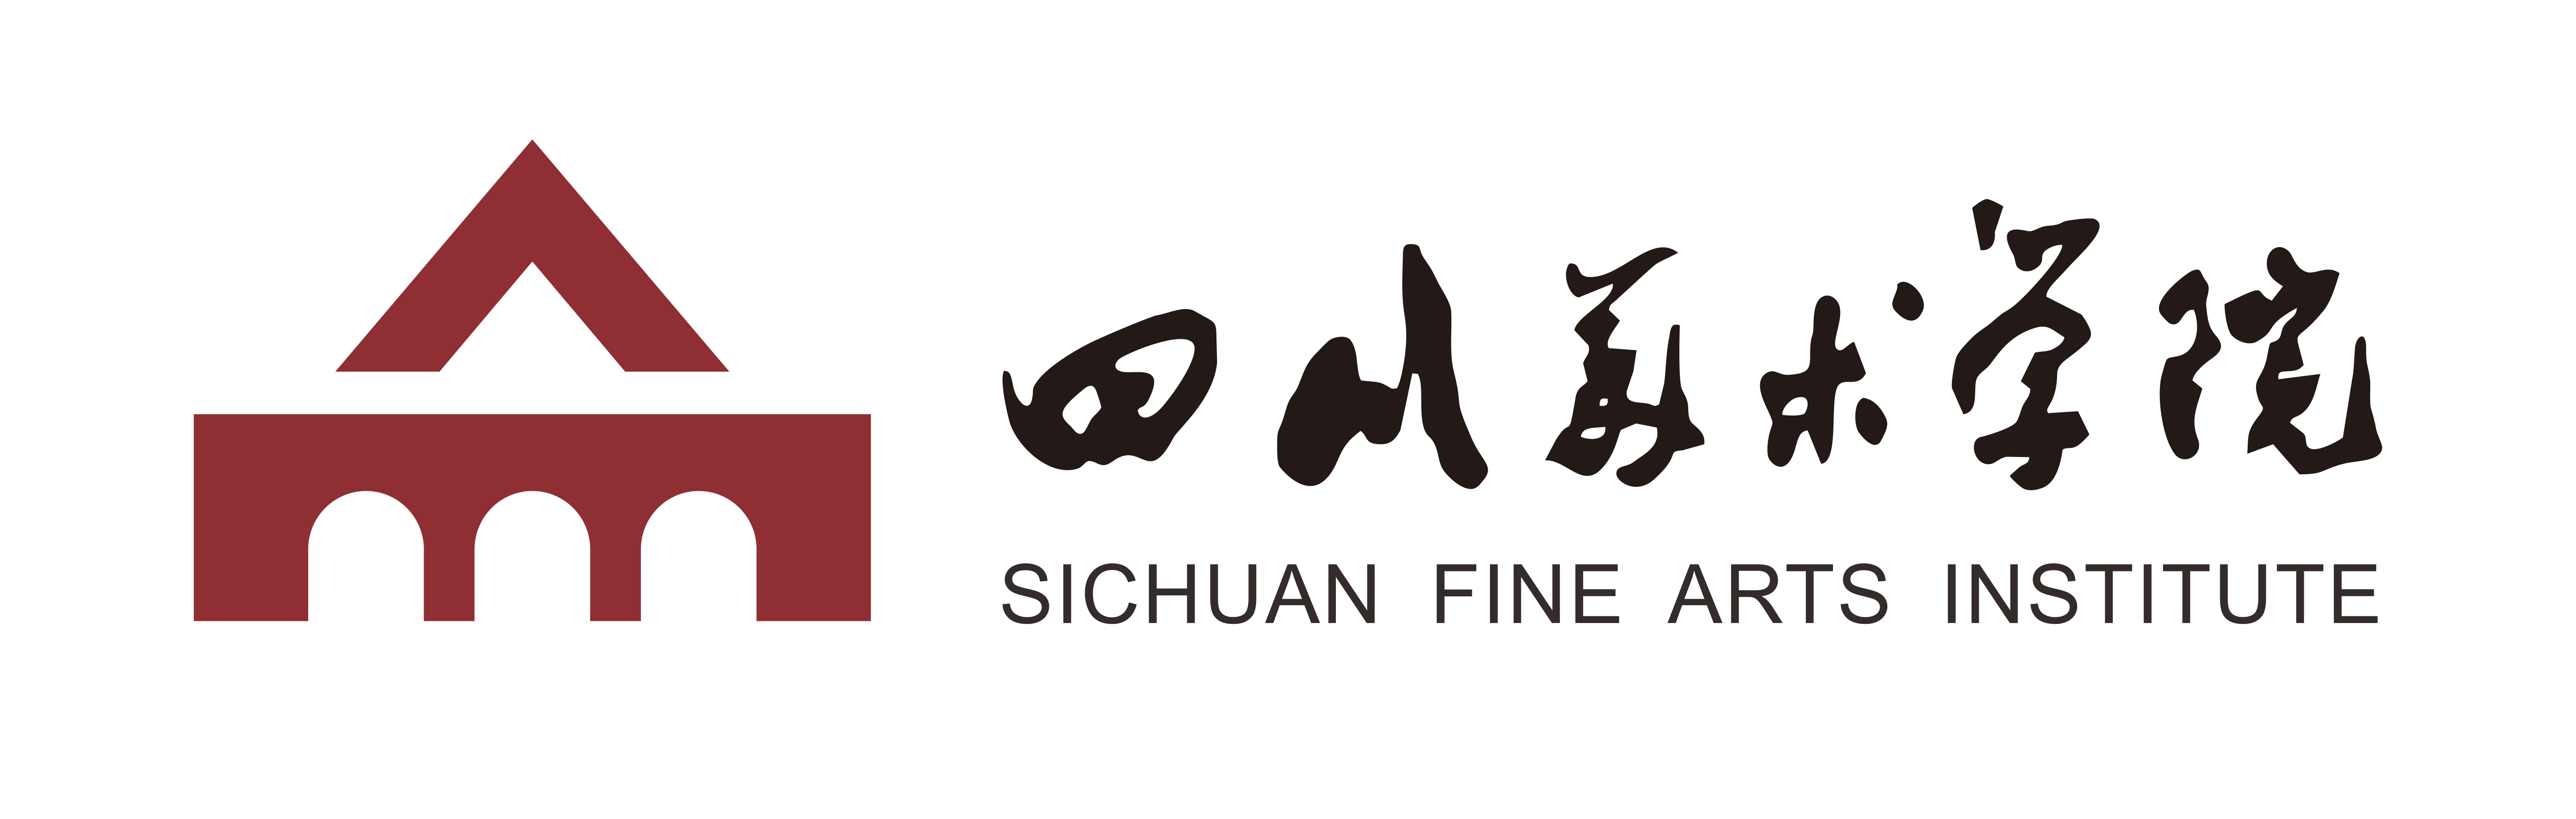 Sichuan Fine Arts Institute, School of Design Logo